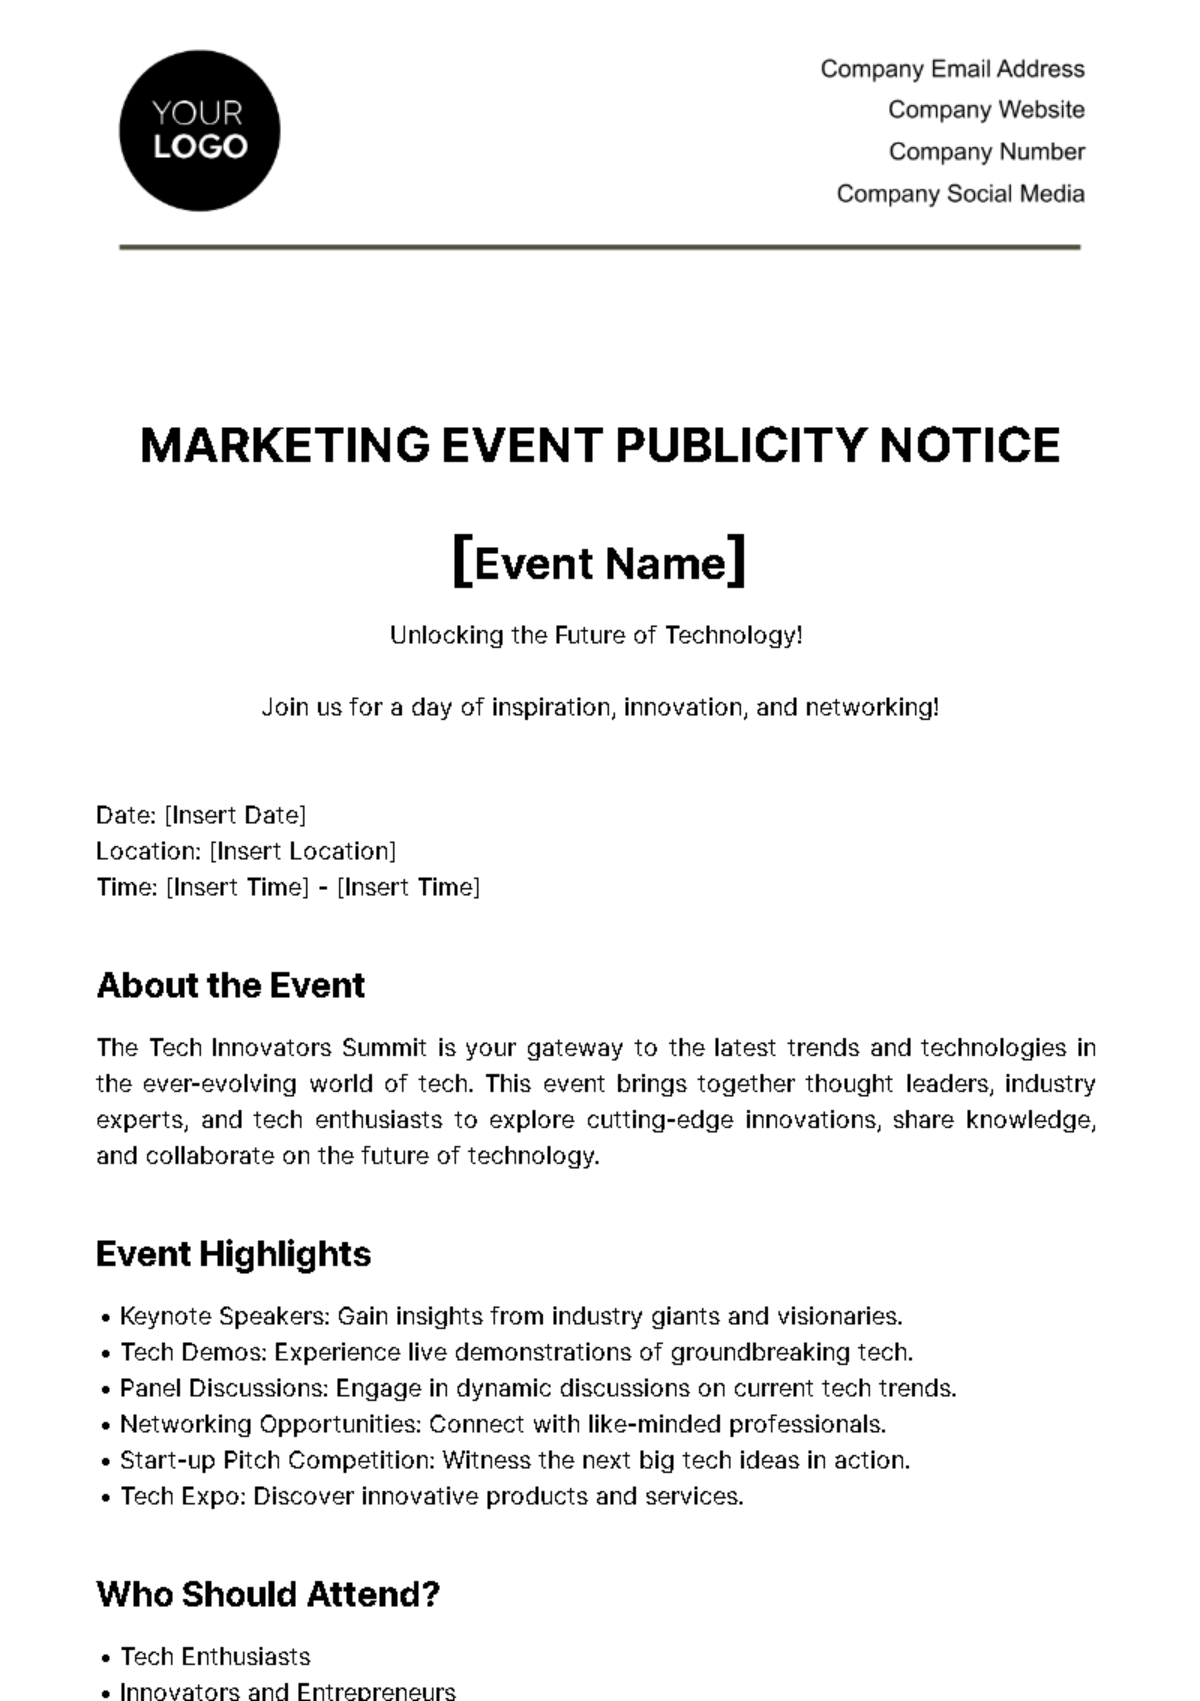 Marketing Event Publicity Notice Template